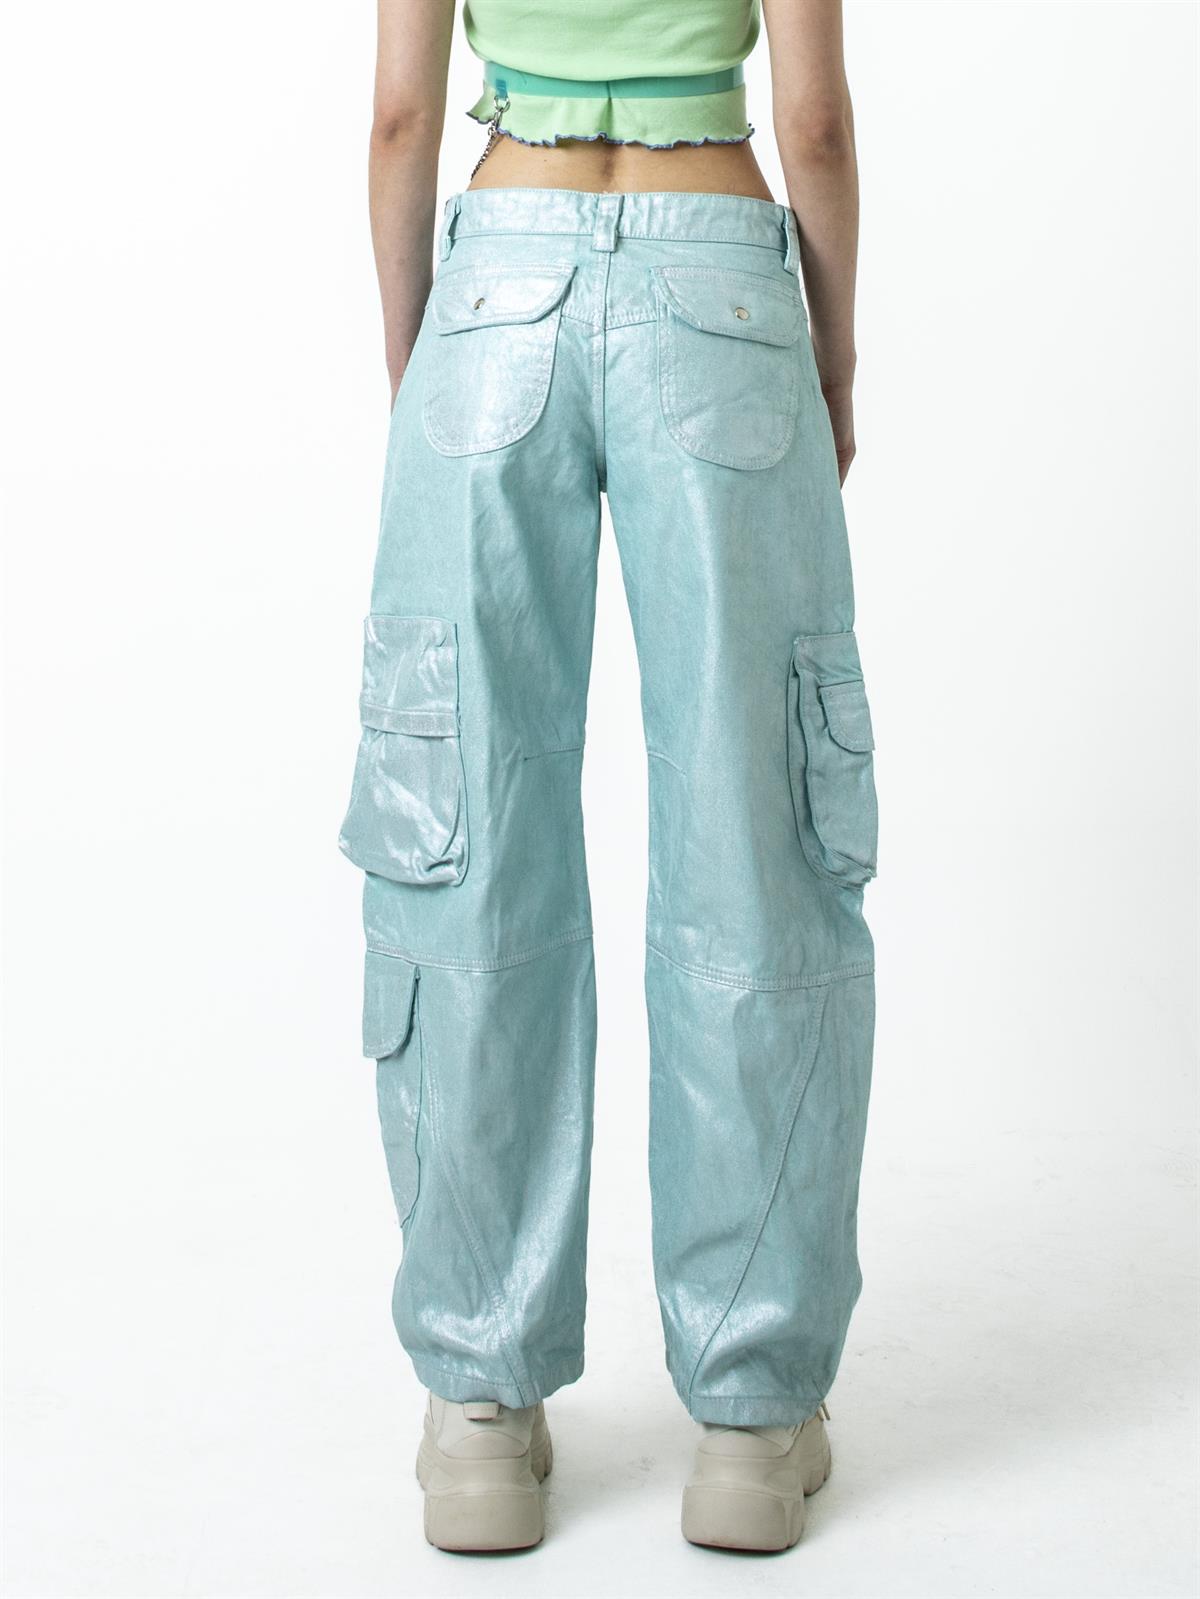 Turquoise Shiny Pantolon